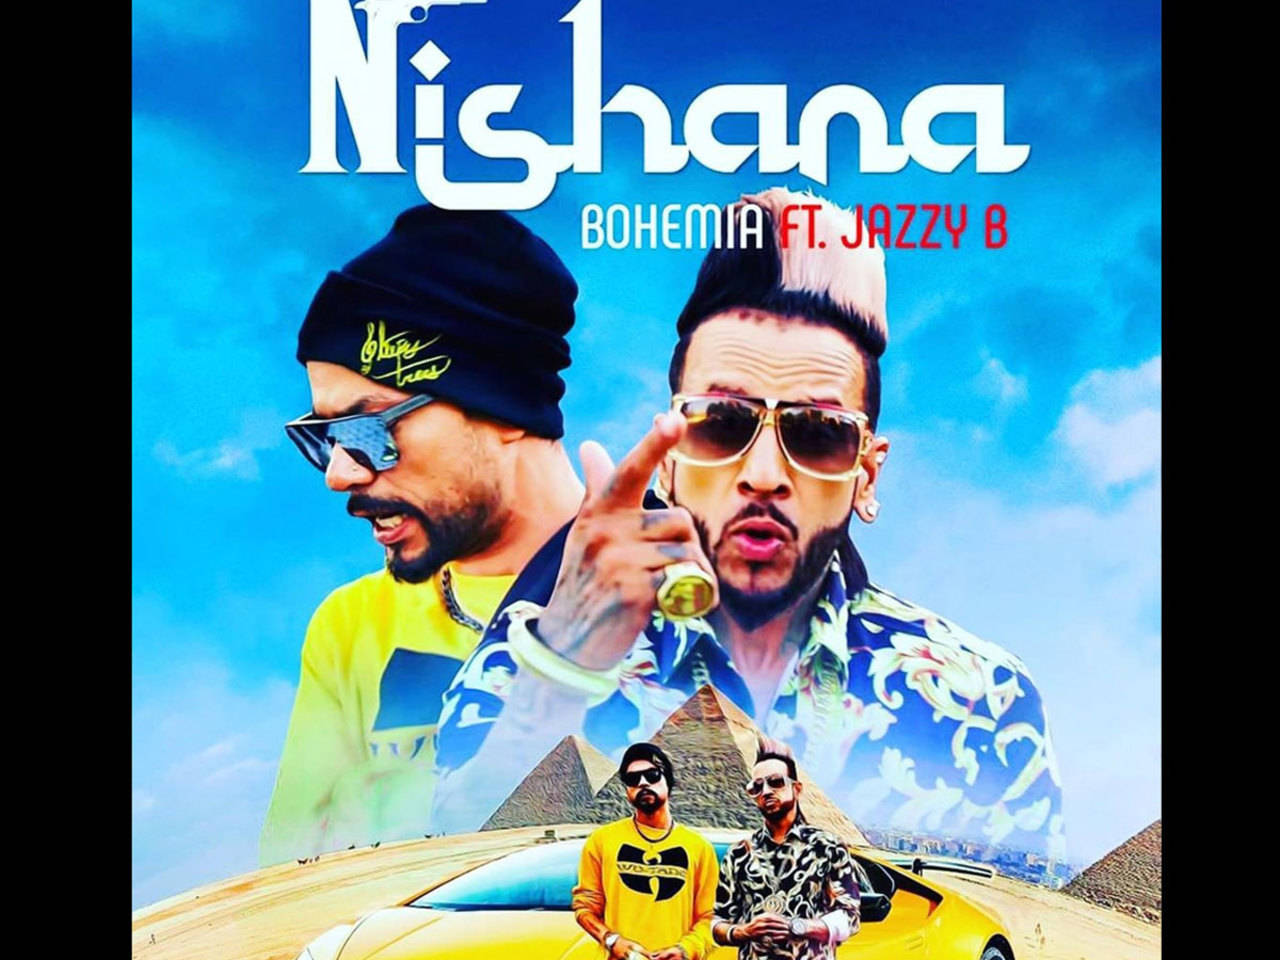 Bohemia ft. Jazzy B's latest collaboration 'Nishana' is out ...